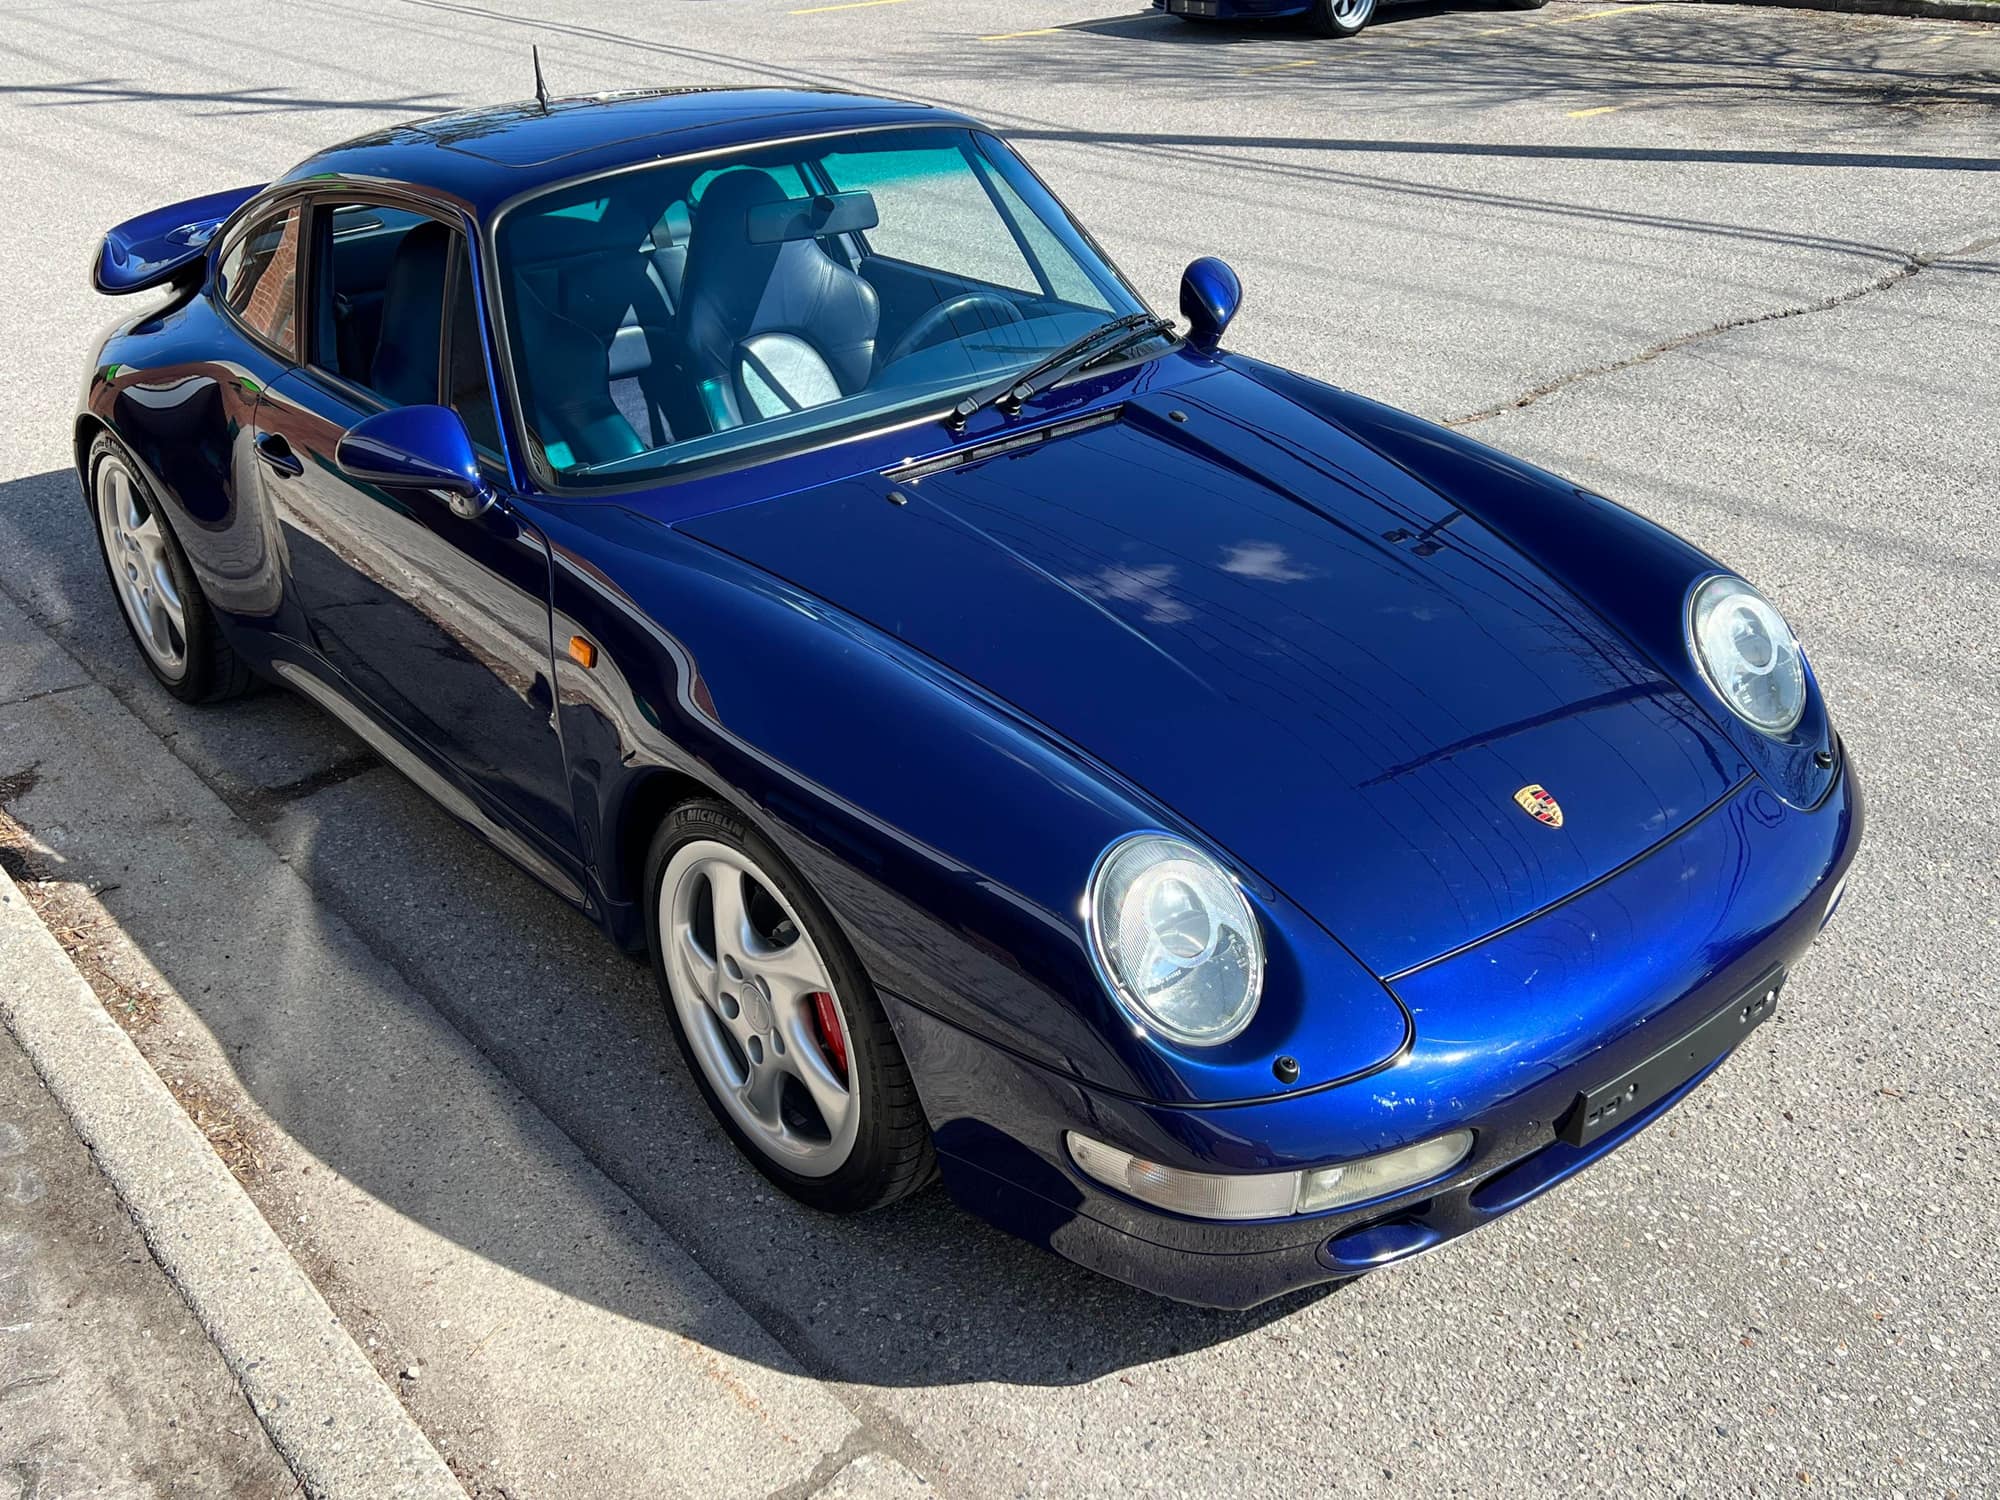 1996 Porsche 911 - 1996 Porsche 993 Turbo - 43k miles, X50 Powerkit, Iris Blue - Used - Detroit, MI 48236, United States